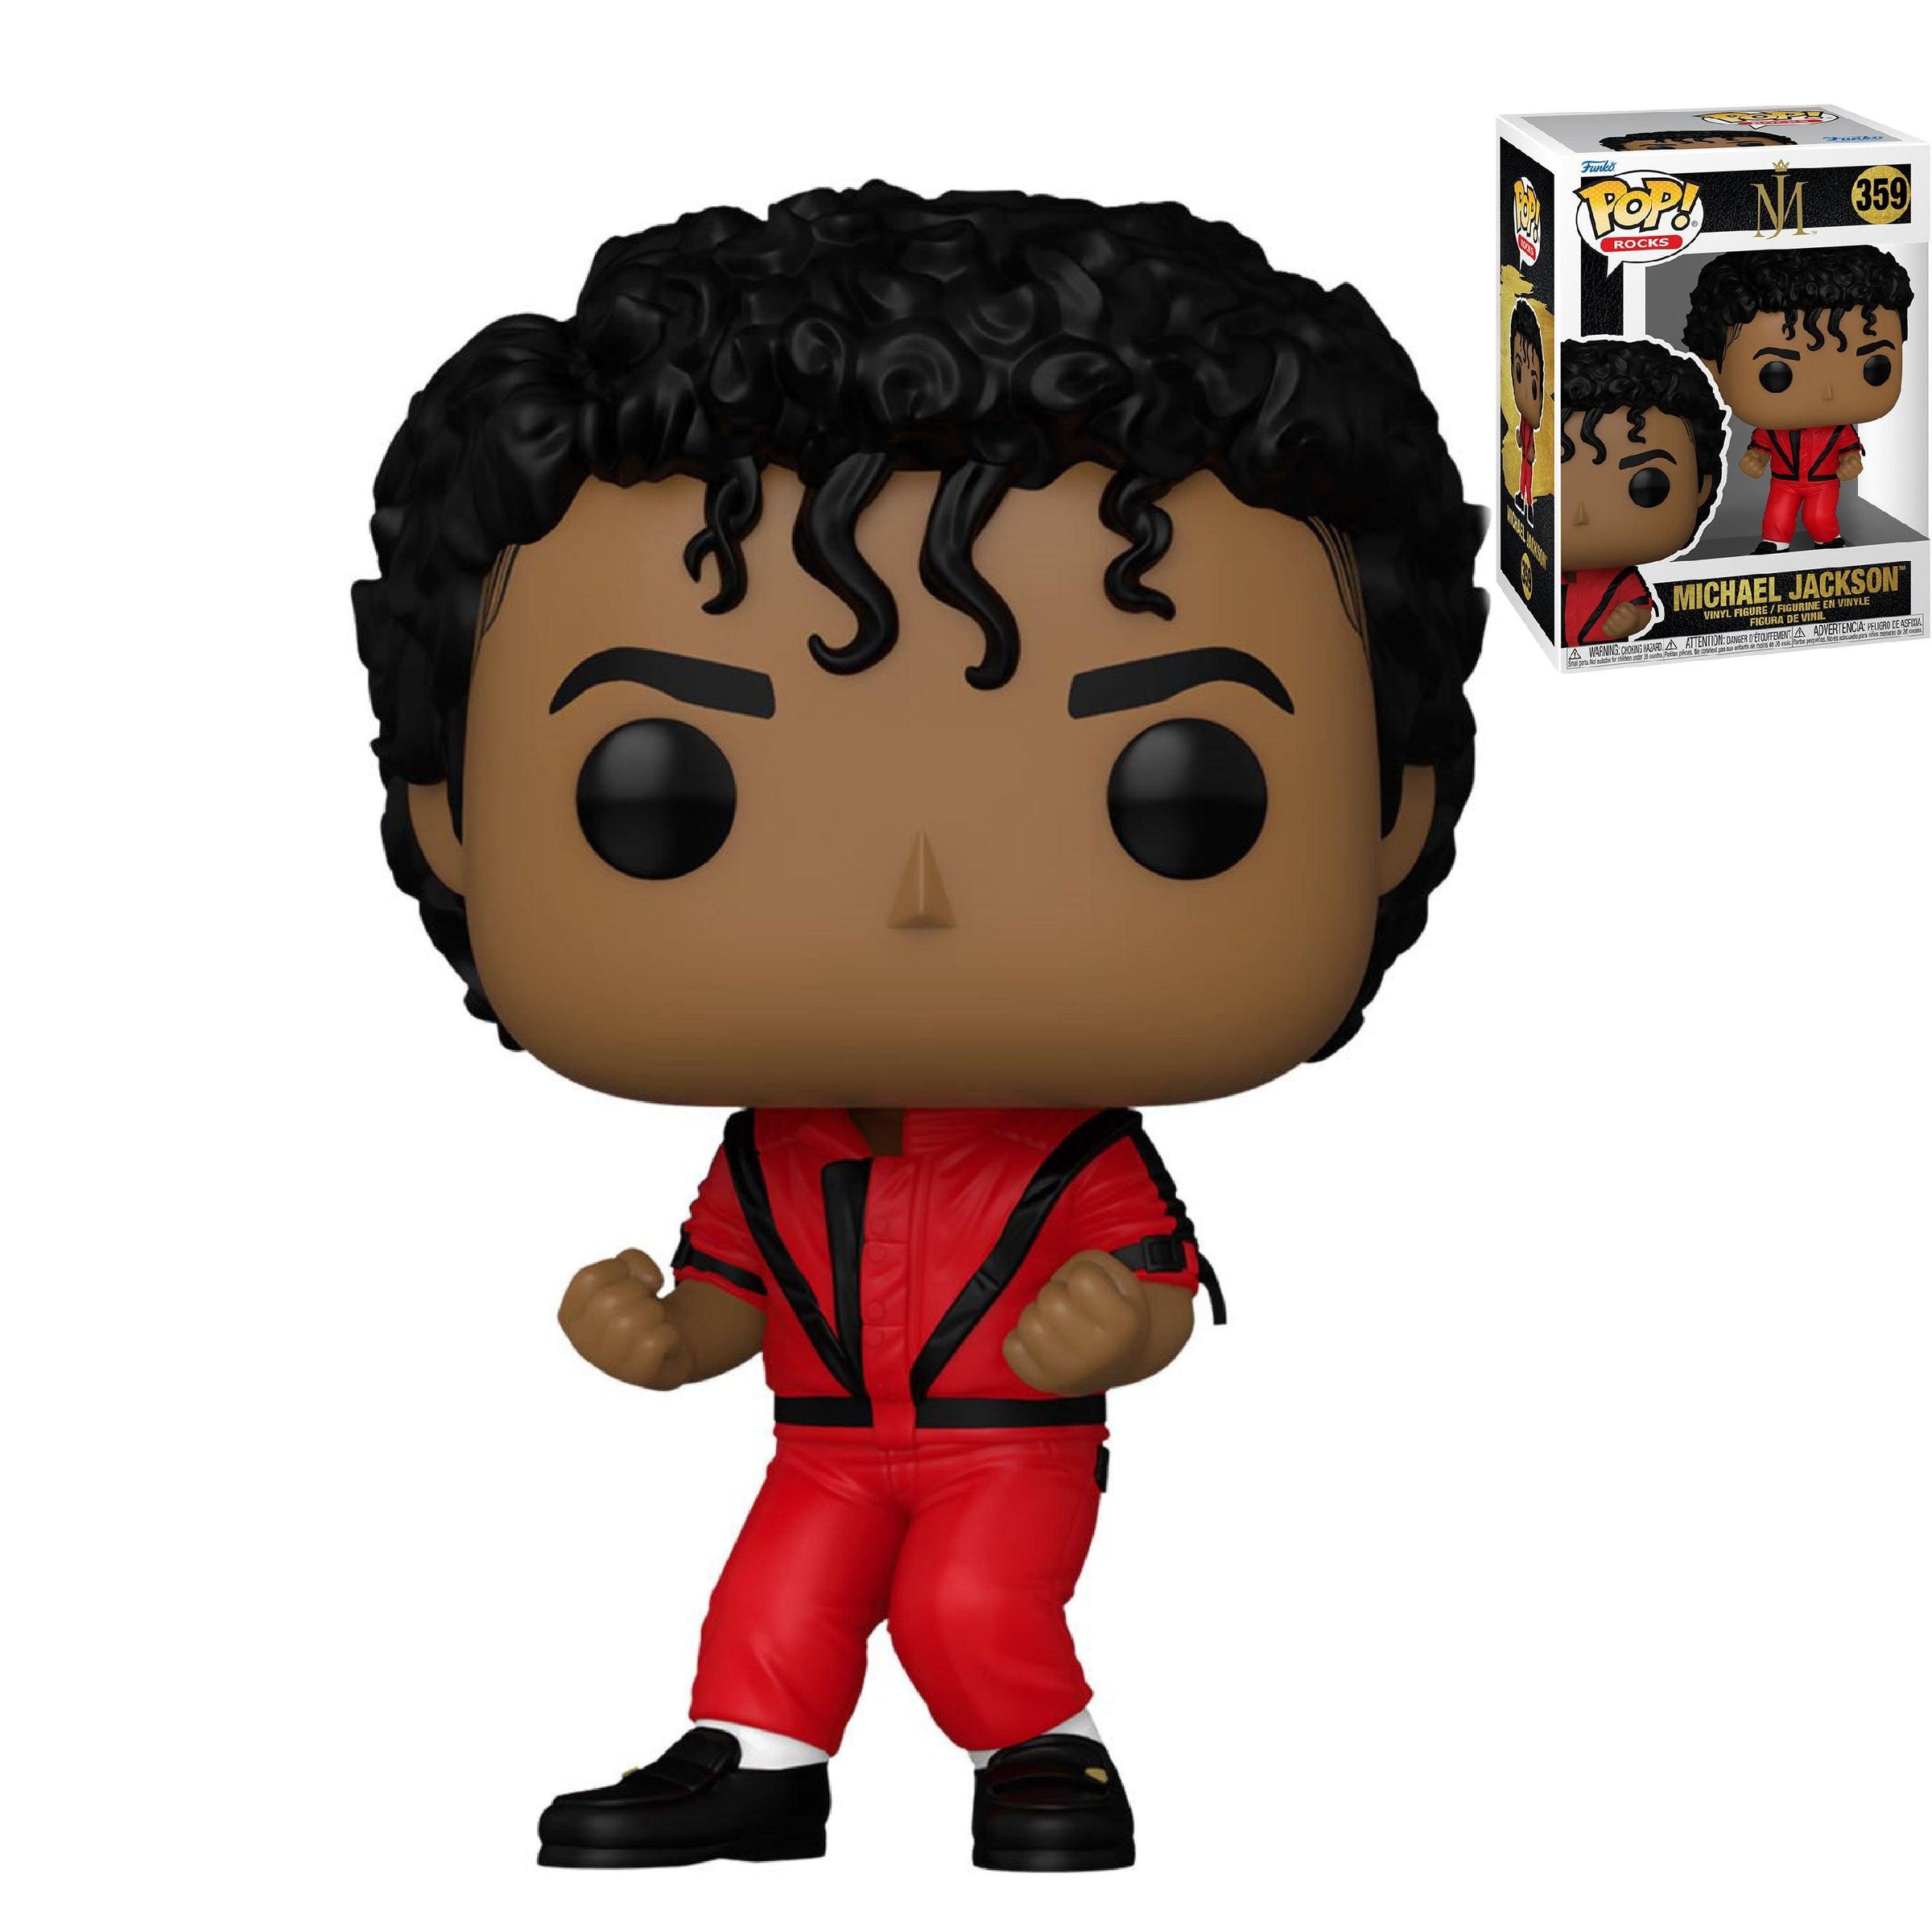 All the Funko POP Michael Jackson figures